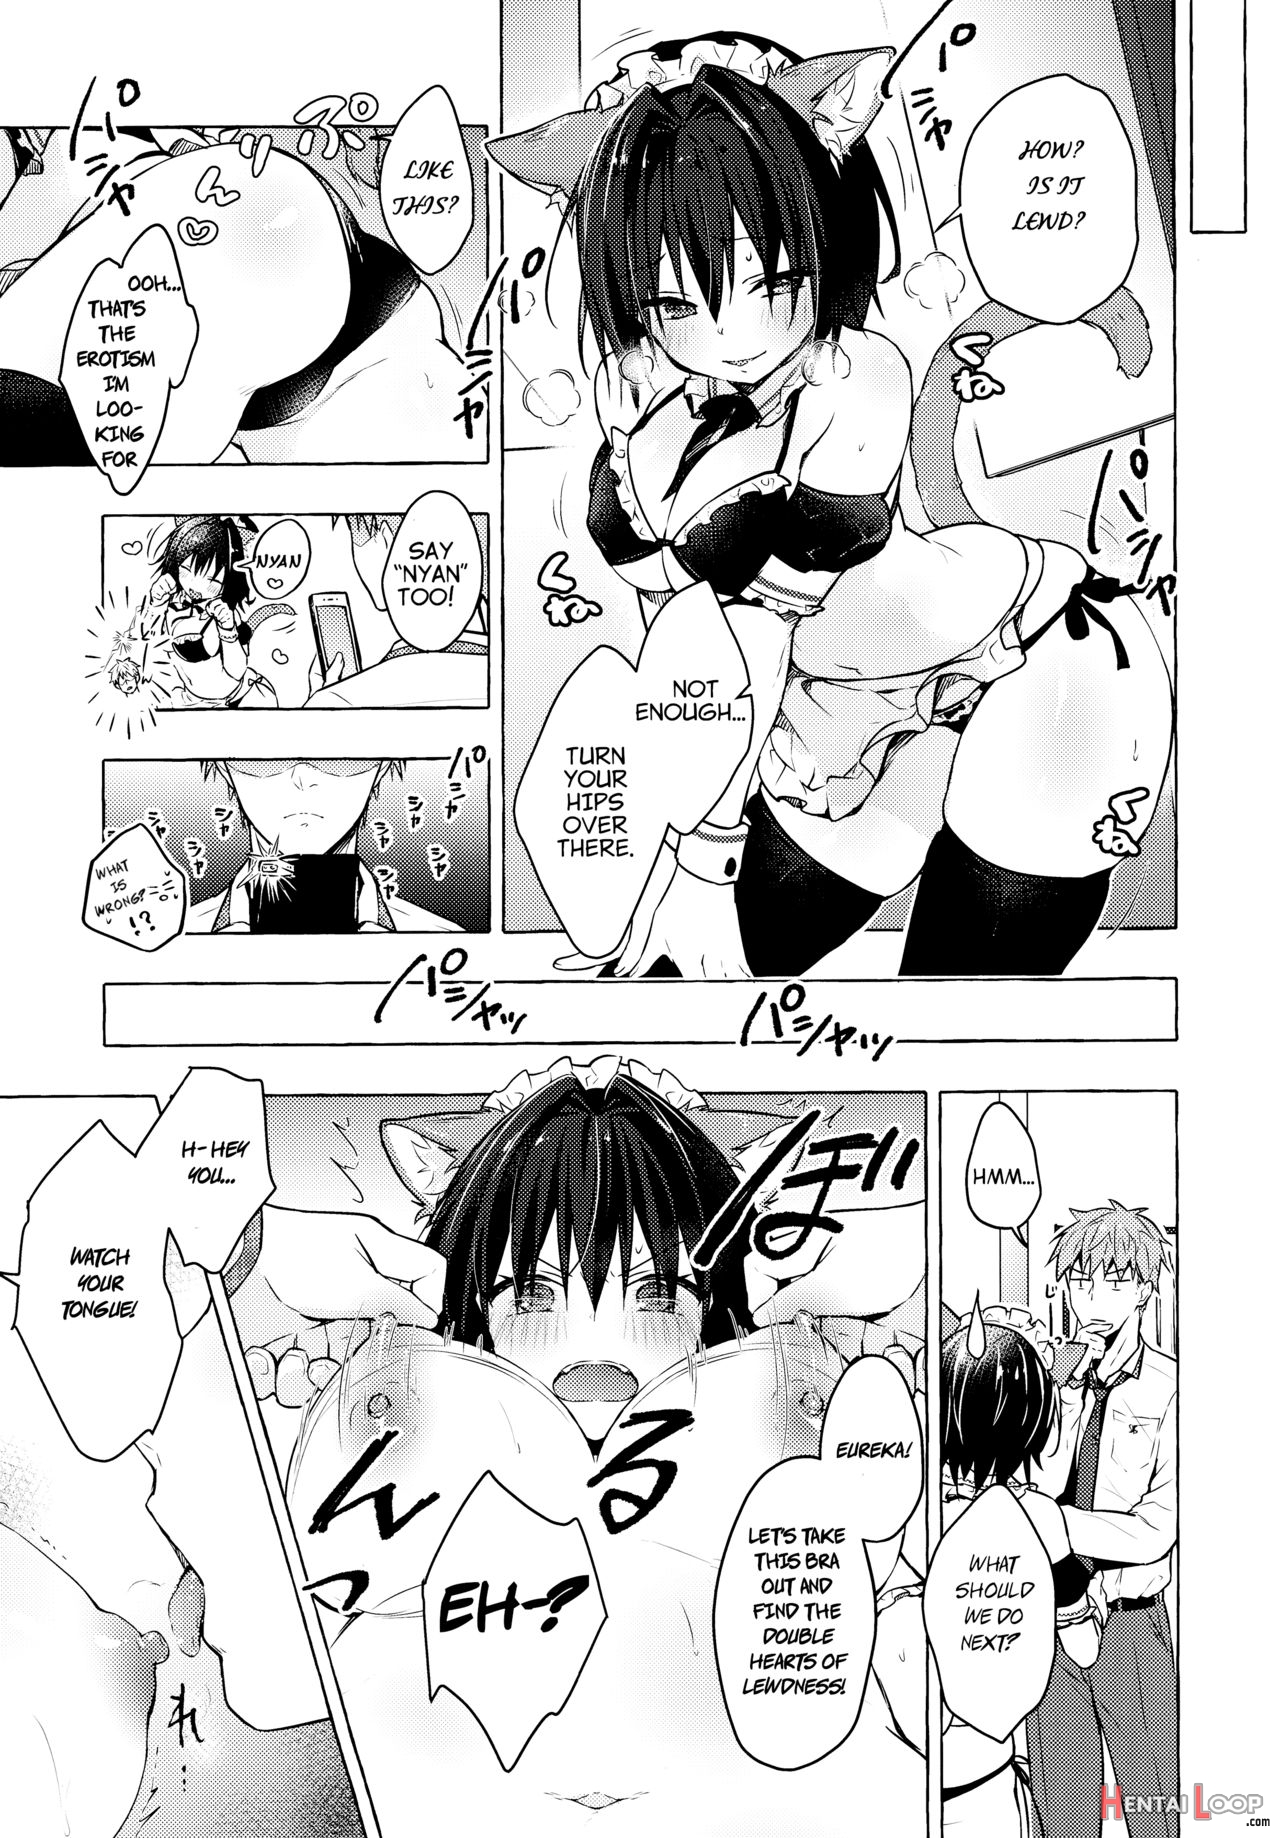 Akira-kun's Sex Life 4 page 10